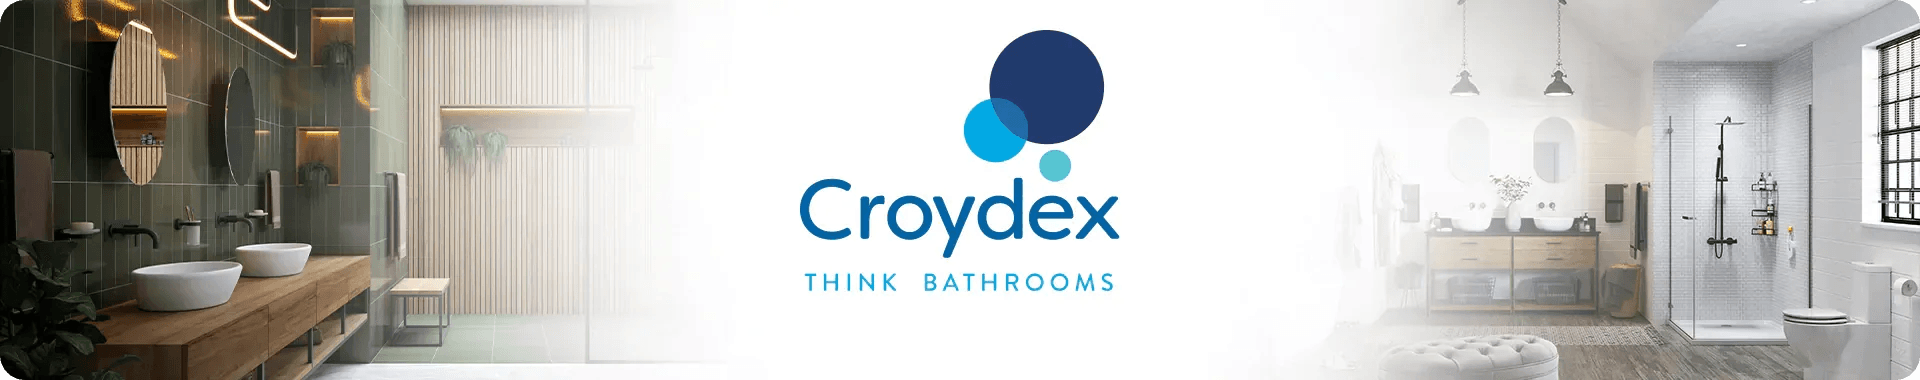 Croydex Banner